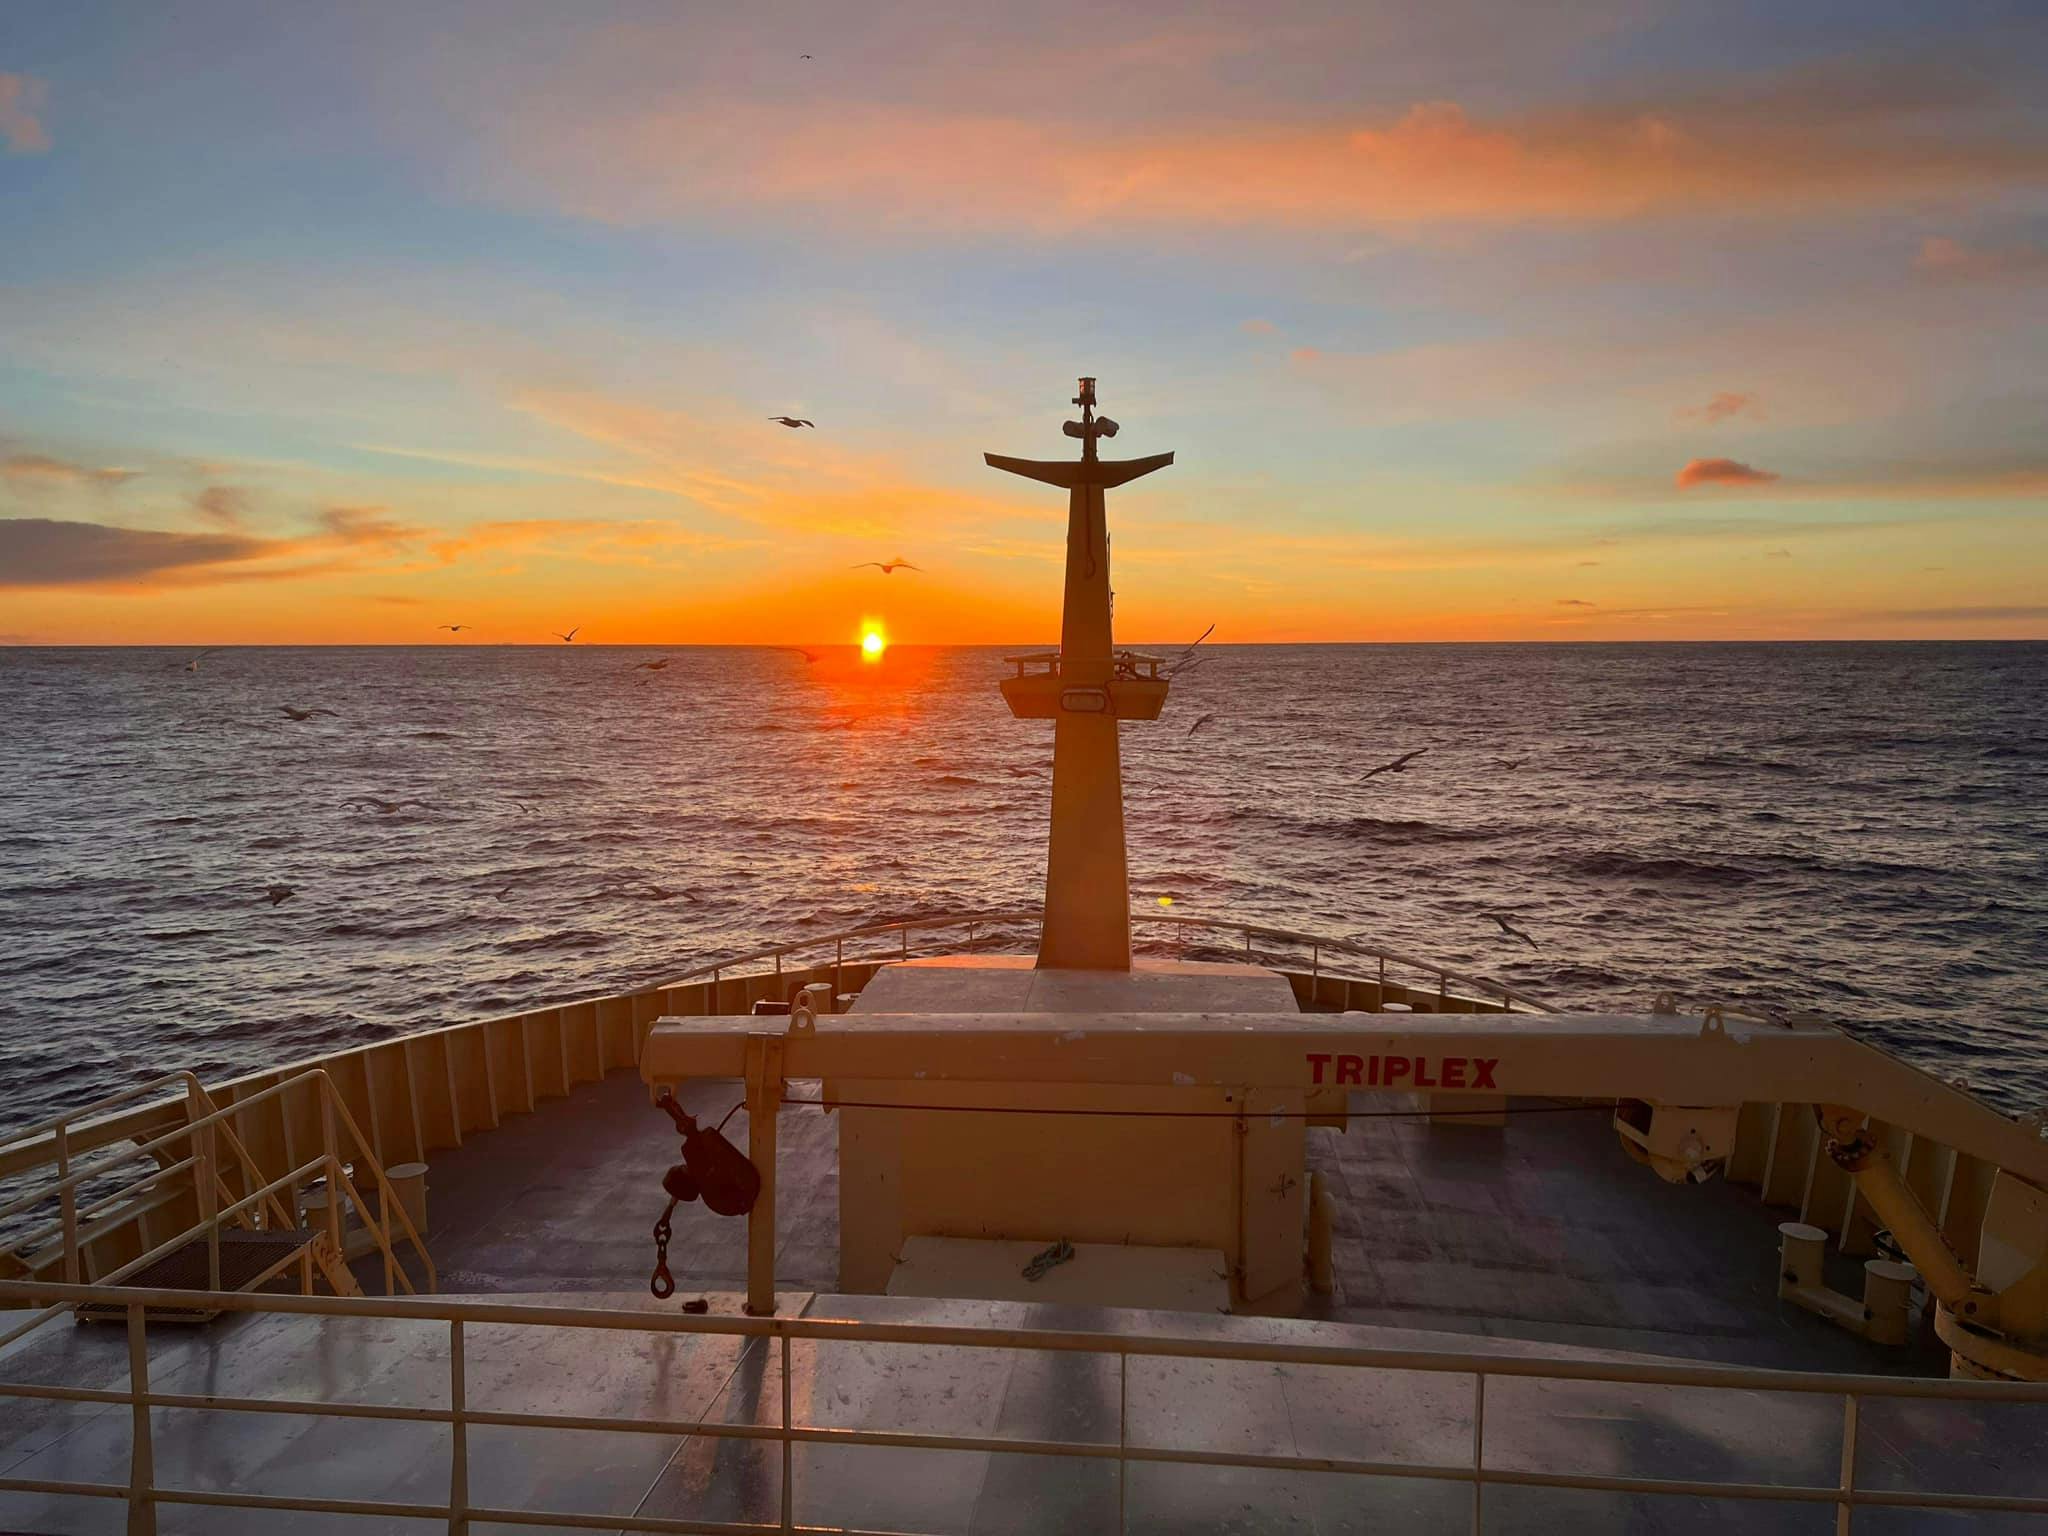 F/T Ramoen sailing into the sunset